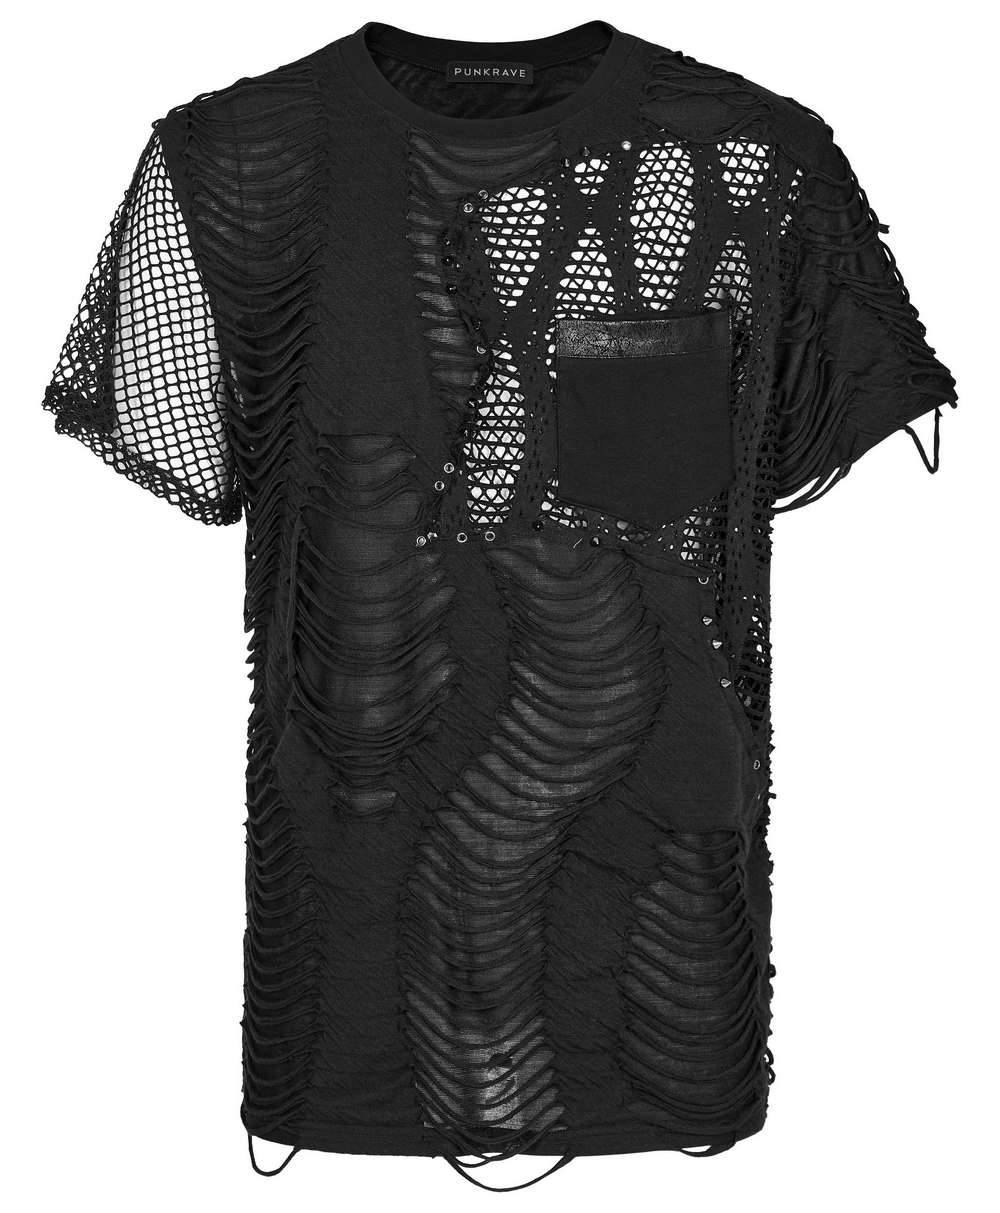 Eyelet-Studded Punk T-Shirt with Mesh Splice Design - HARD'N'HEAVY